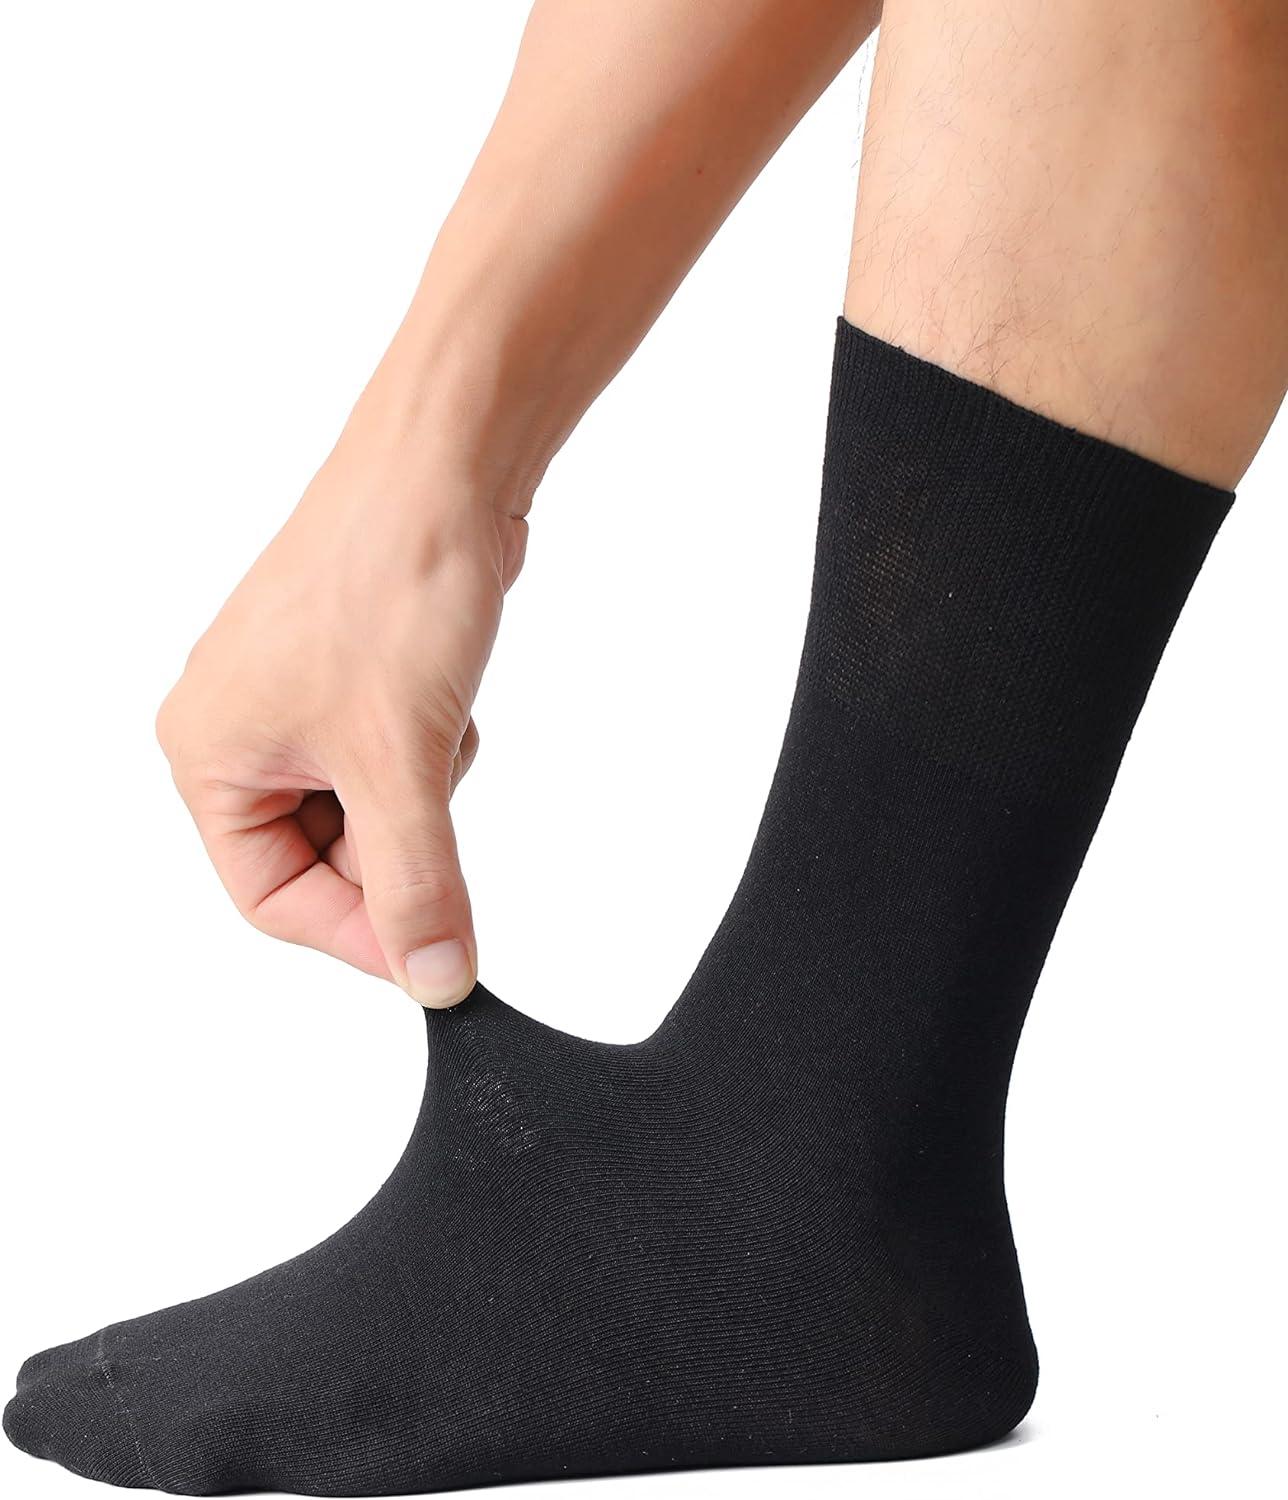 Polawind mens diabetic socks size 10-13 wide loose top men's edema  neuropathy ankle socks for men loose extra wide non binding diabetes sock 1  & 3 & 6 Pair Packs (6 Pair BLACK) One Size Black